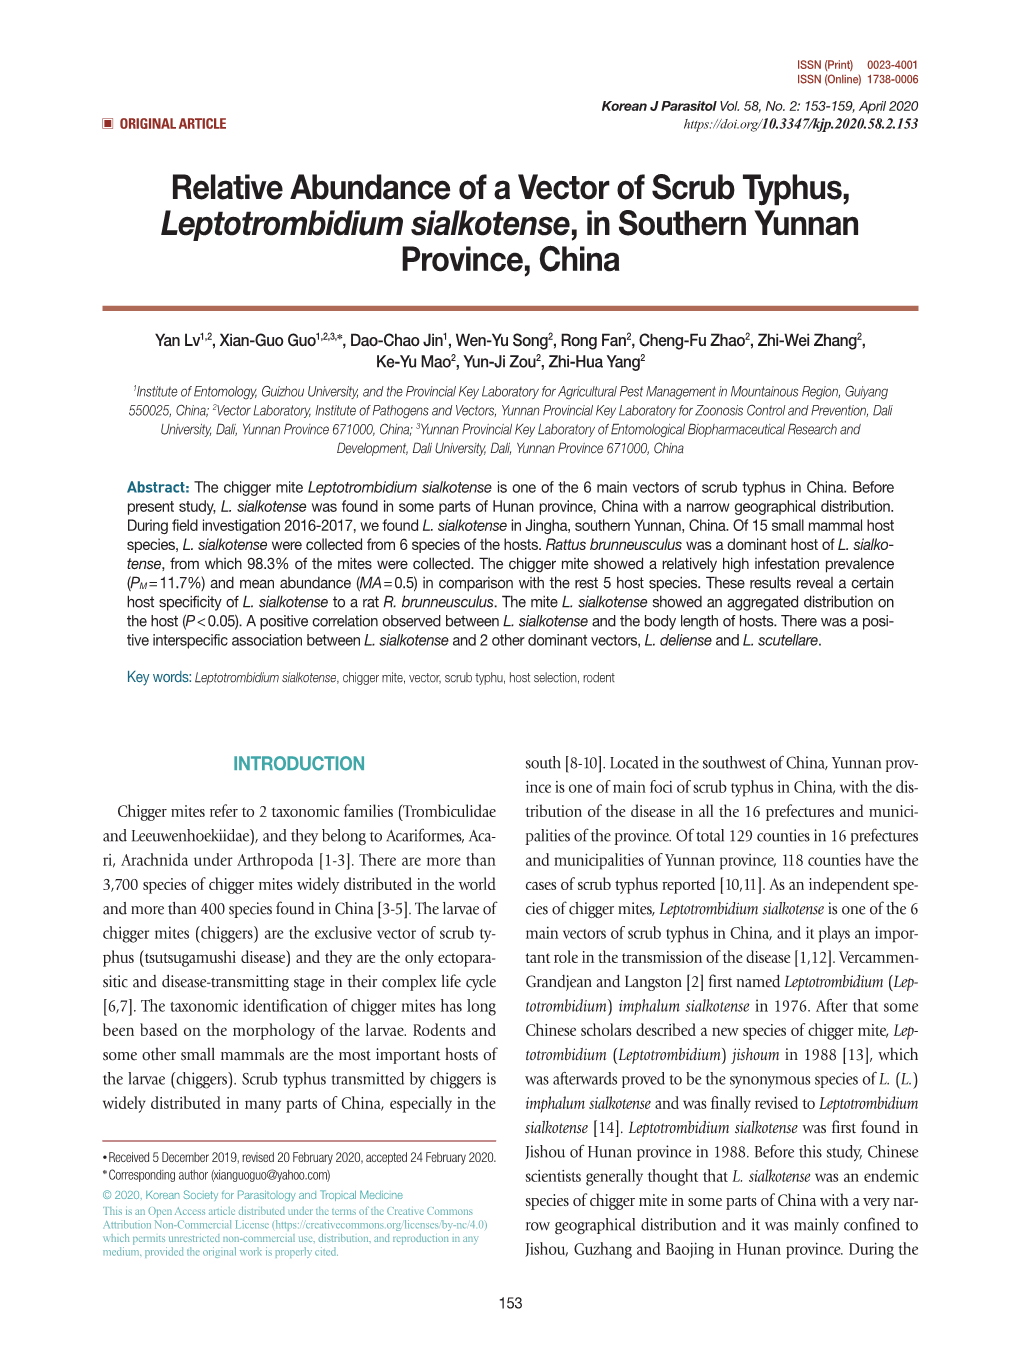 Relative Abundance of a Vector of Scrub Typhus, Leptotrombidium Sialkotense, in Southern Yunnan Province, China